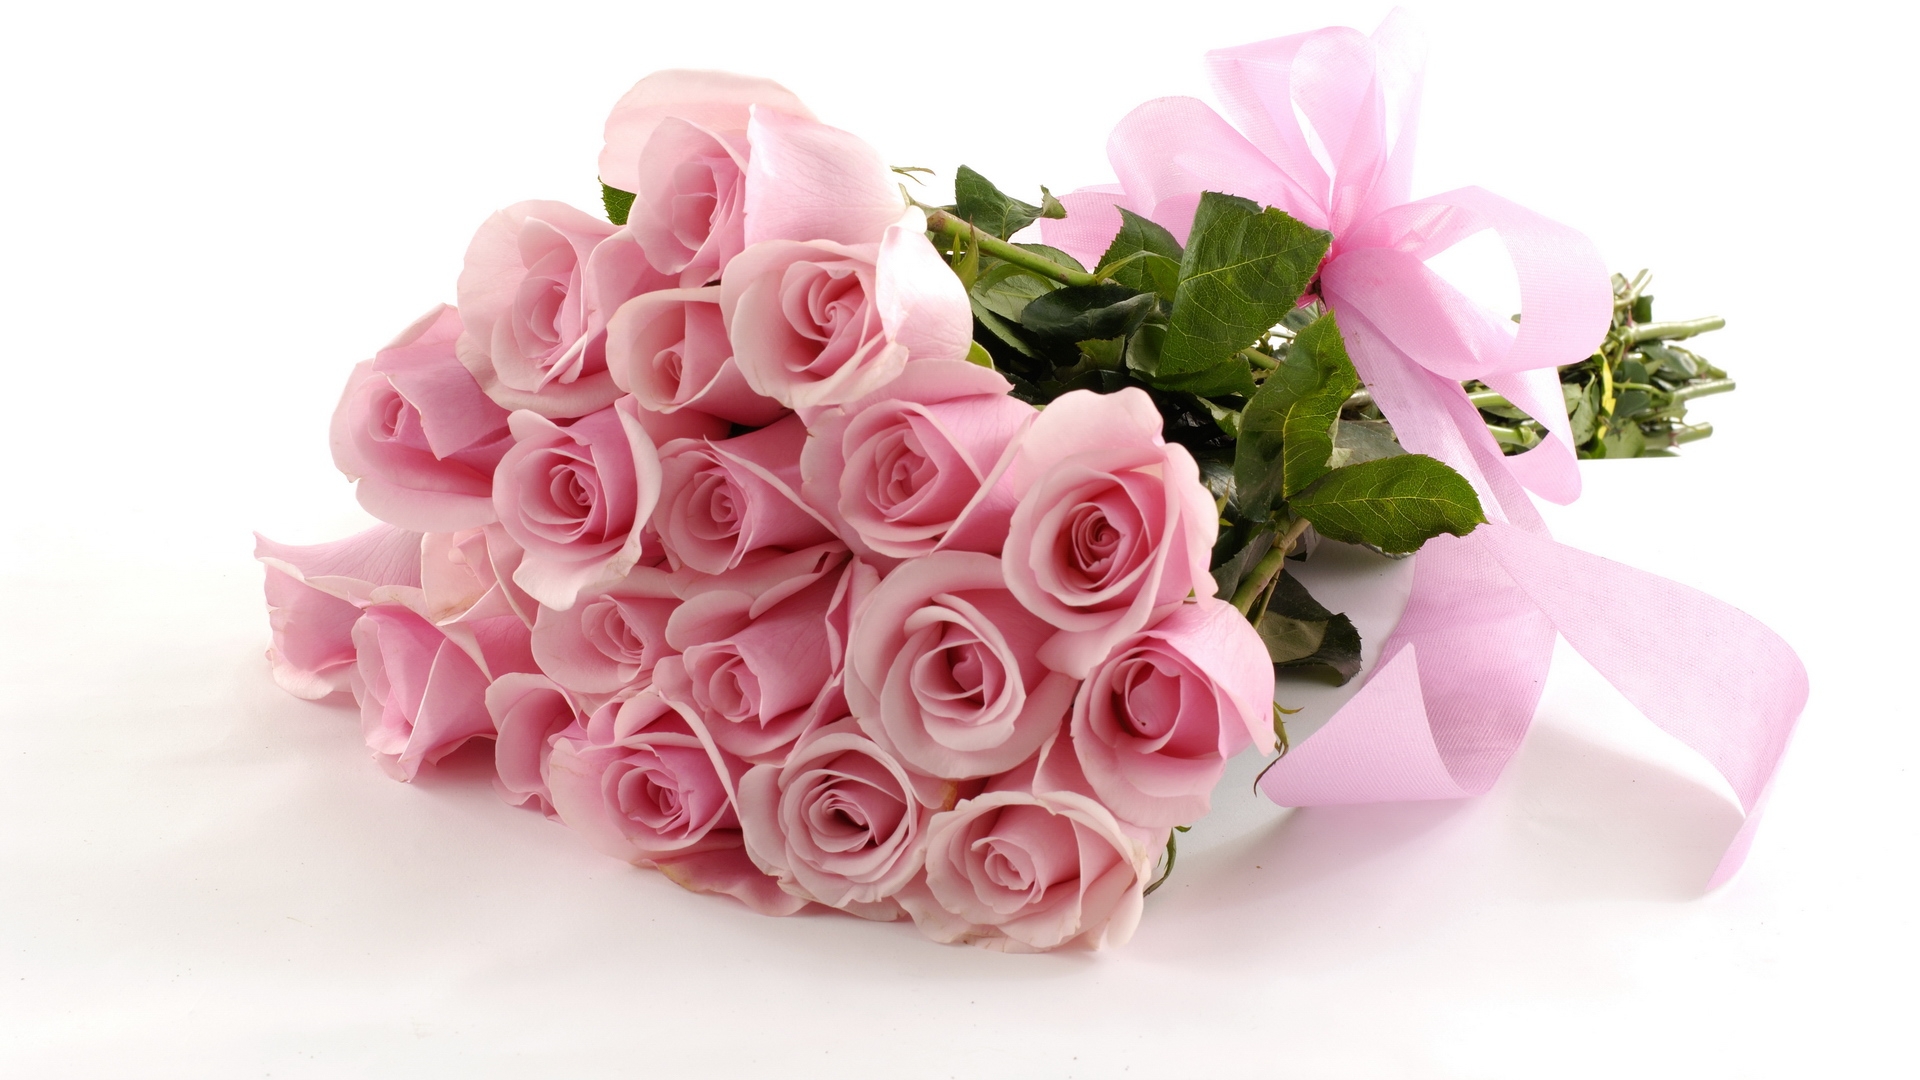 Саяногорск Инфо - holidays___international_womens_day_beautiful_pink_bouquet_as_a_gift_on_march_8_057093_.jpg, Скачано: 1103